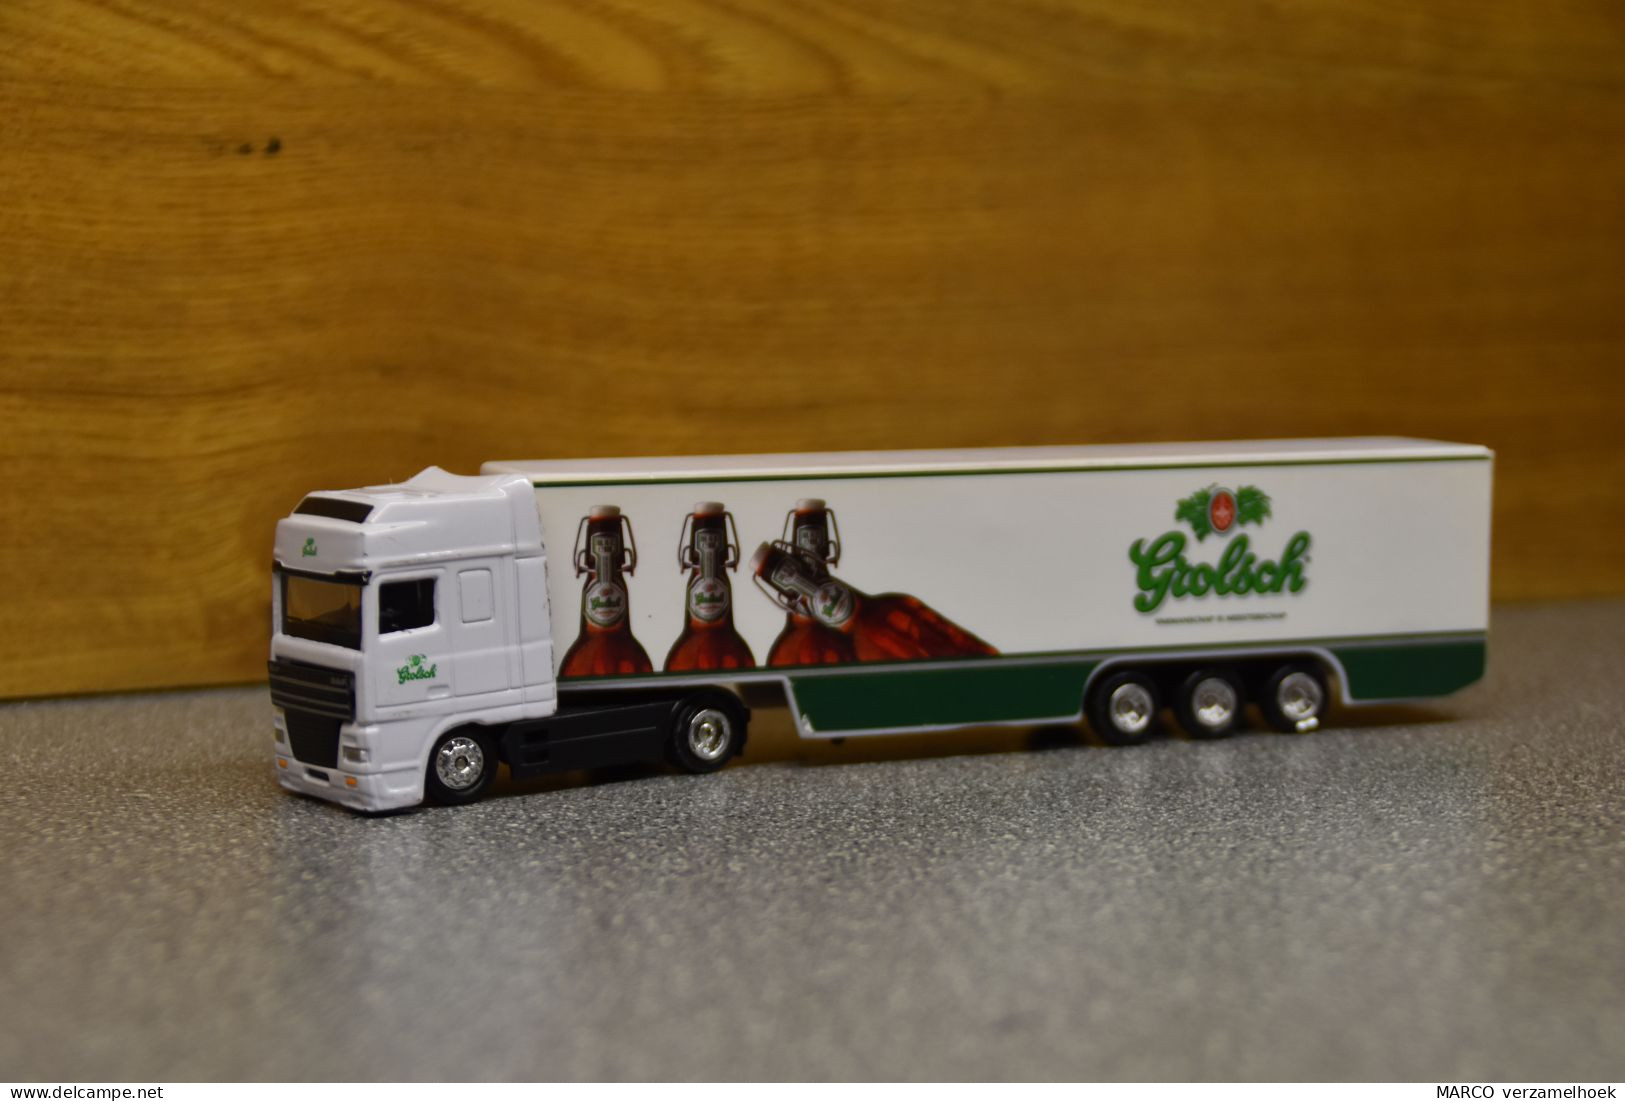 Vrachtwagen-truck Grolsch Bieren Groenlo-enschede (NL) Scale 1:87 DAF - Echelle 1:87